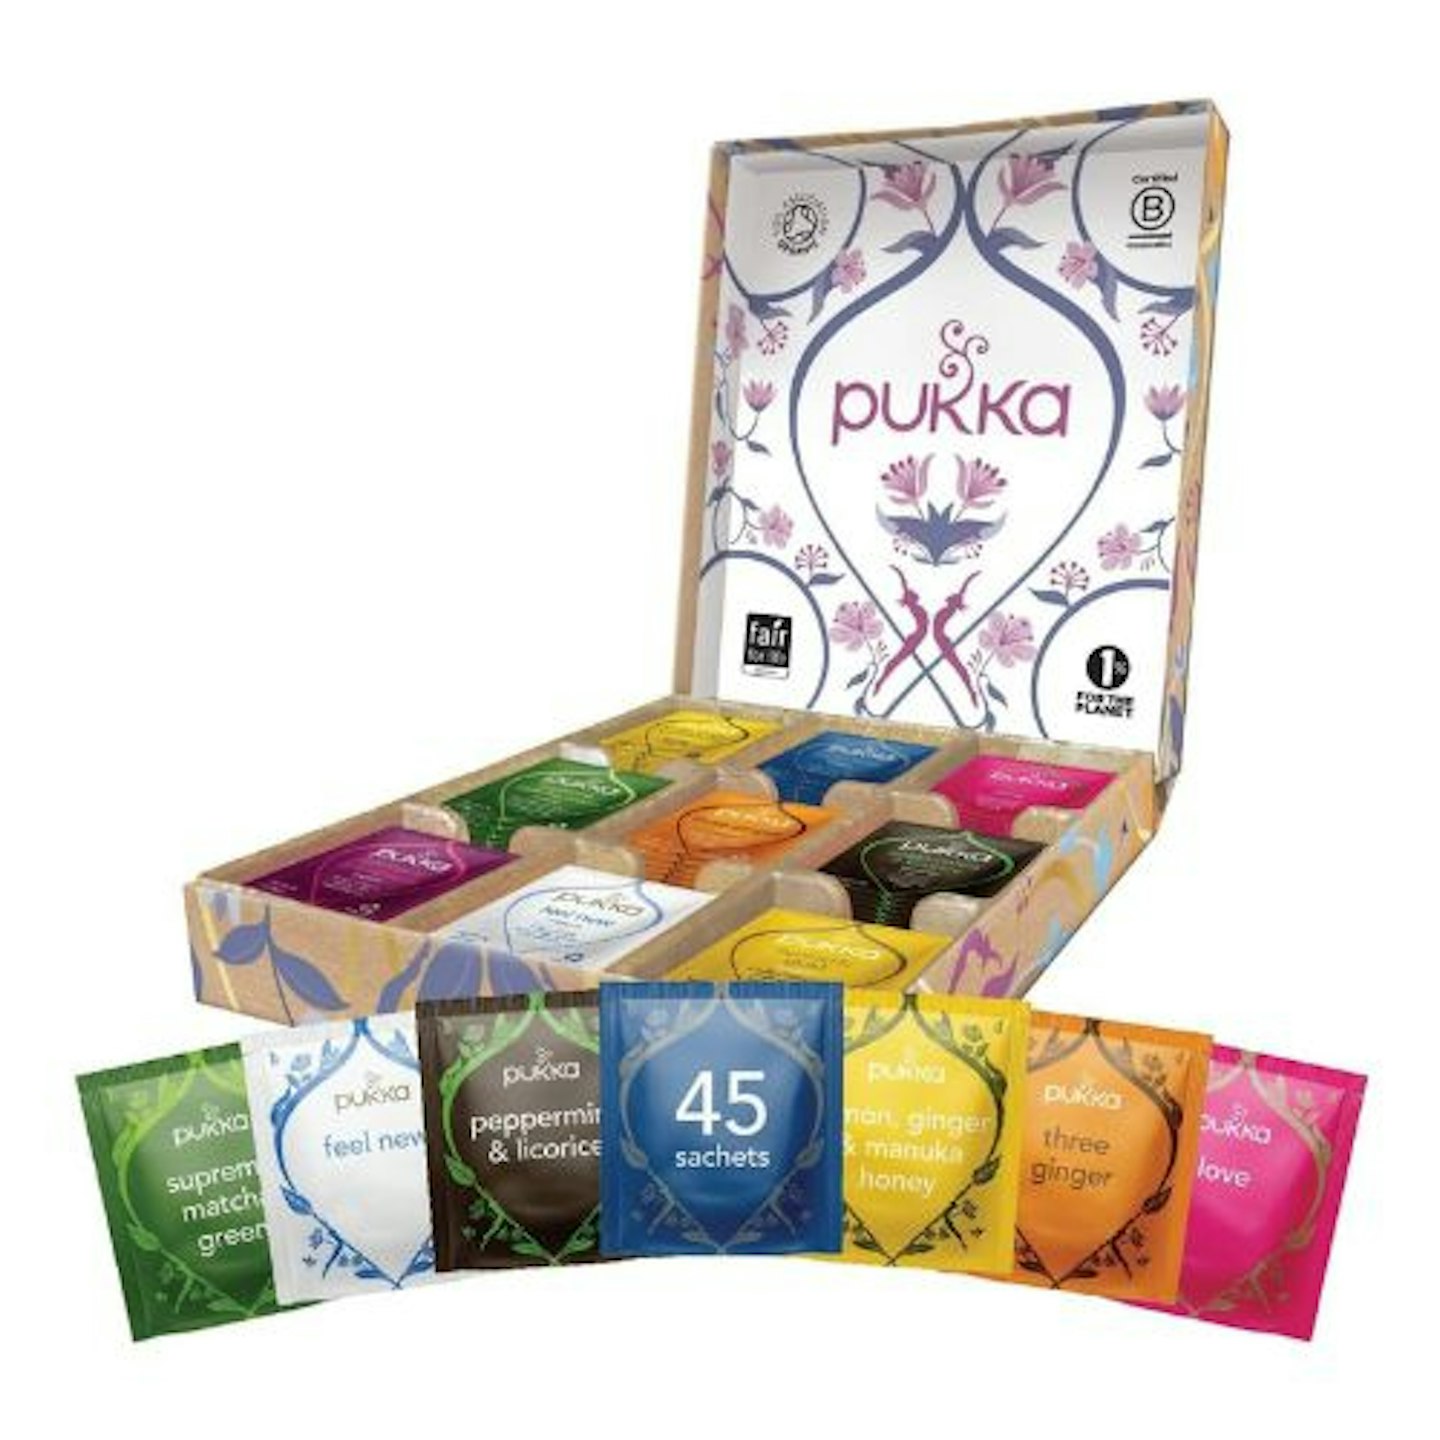 Pukka Herbs Tea Selection Gift Box, Organic Herbal Teas (45 sachets)